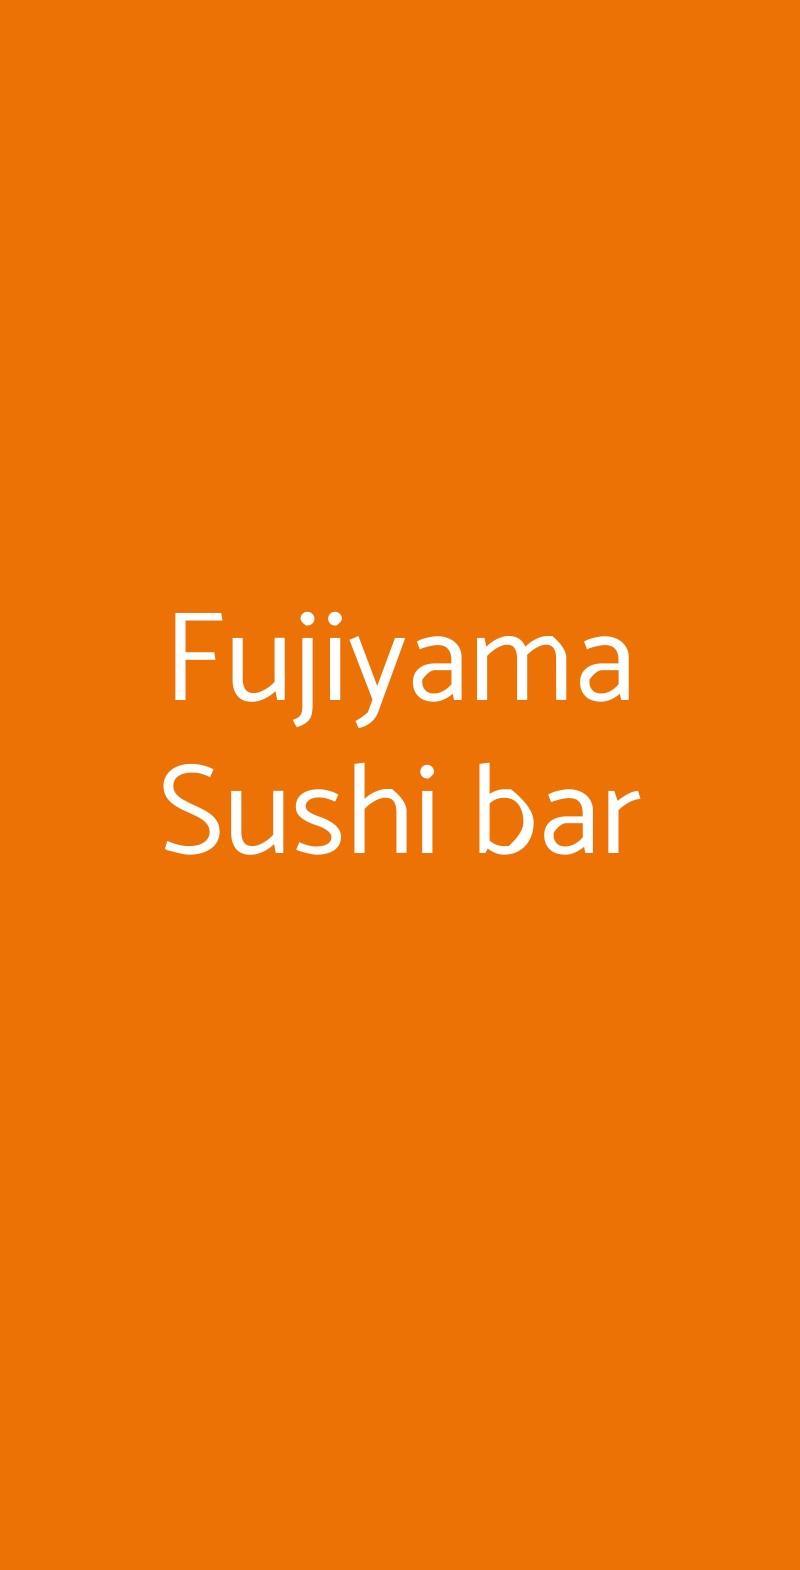 Fujiyama Sushi bar Milano menù 1 pagina